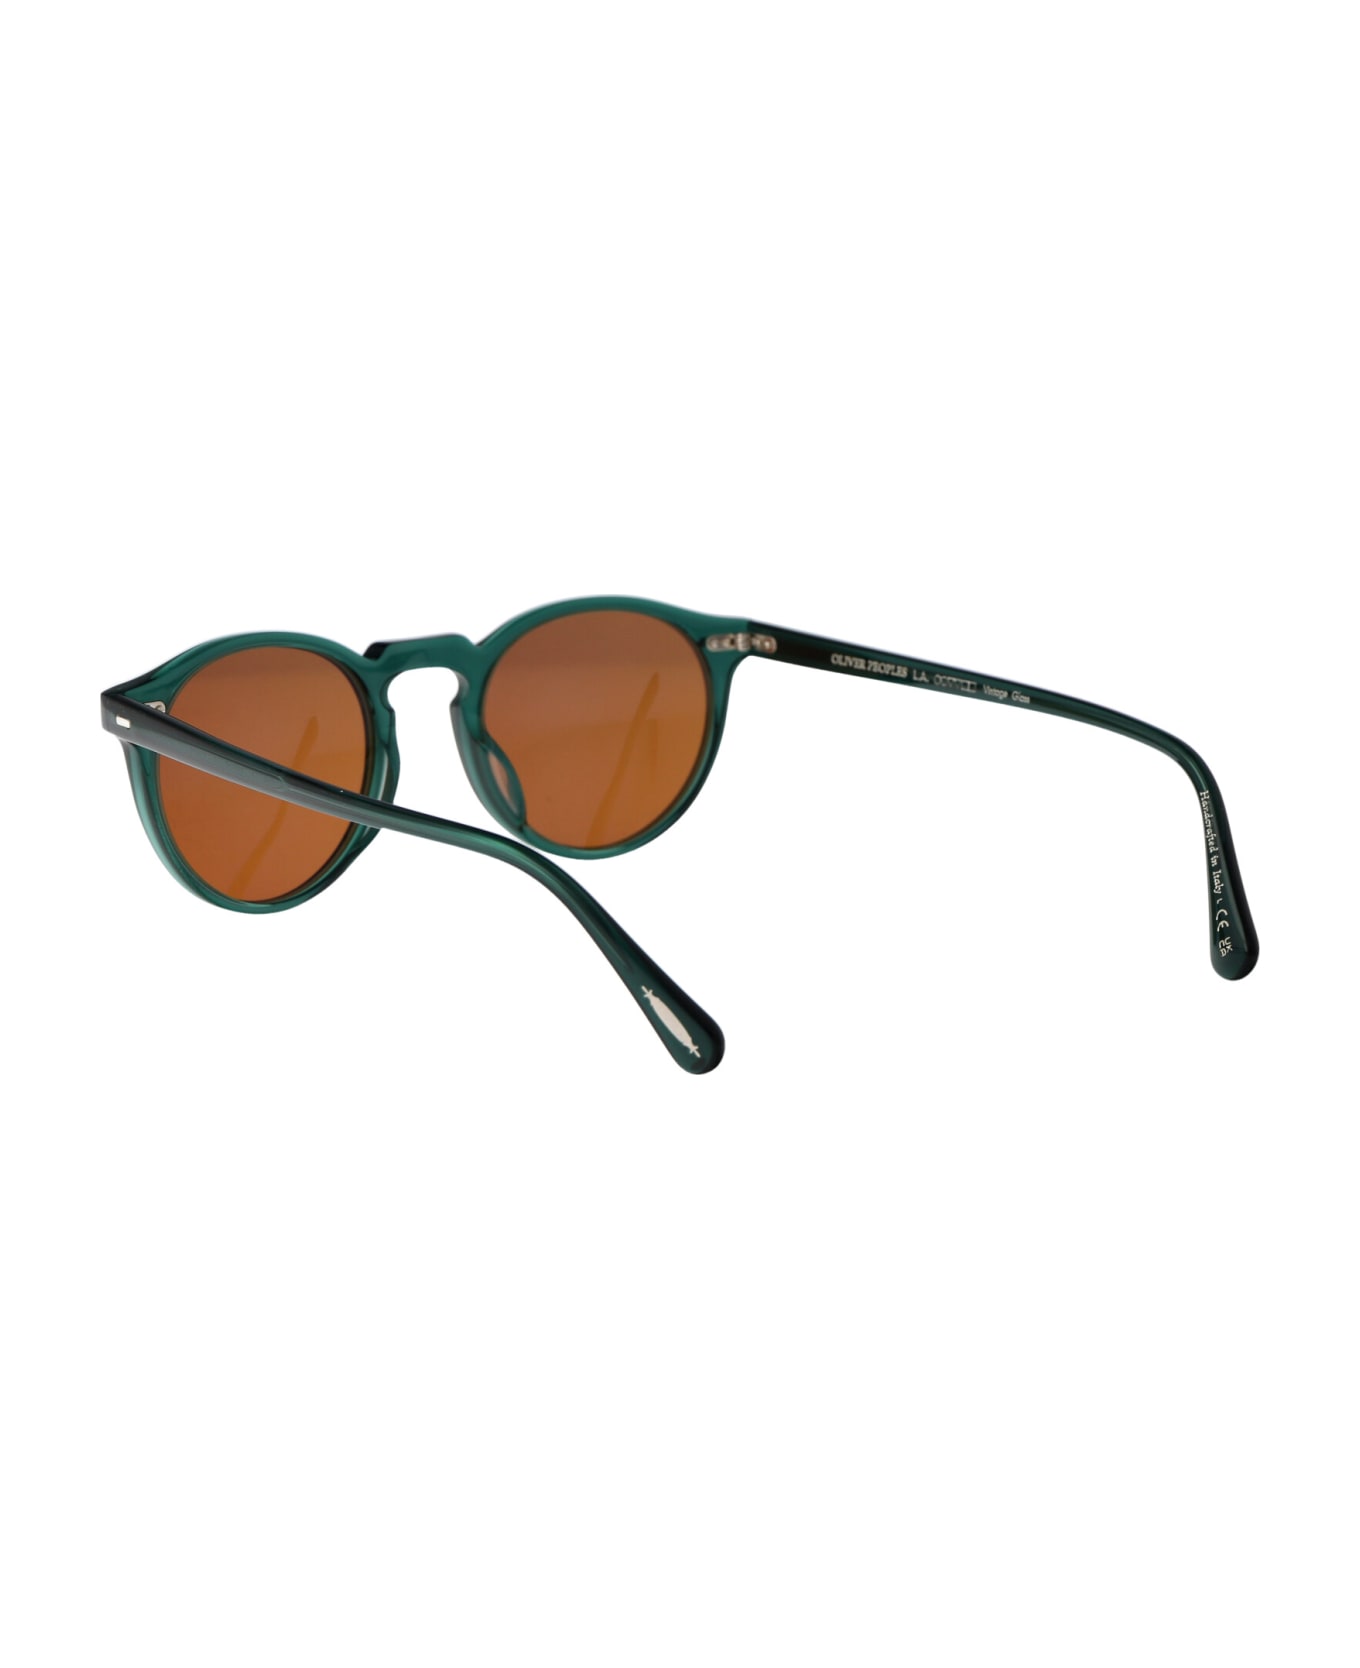 Oliver Peoples Gregory Peck Sun Sunglasses - 176353 Translucent Dark Teal サングラス